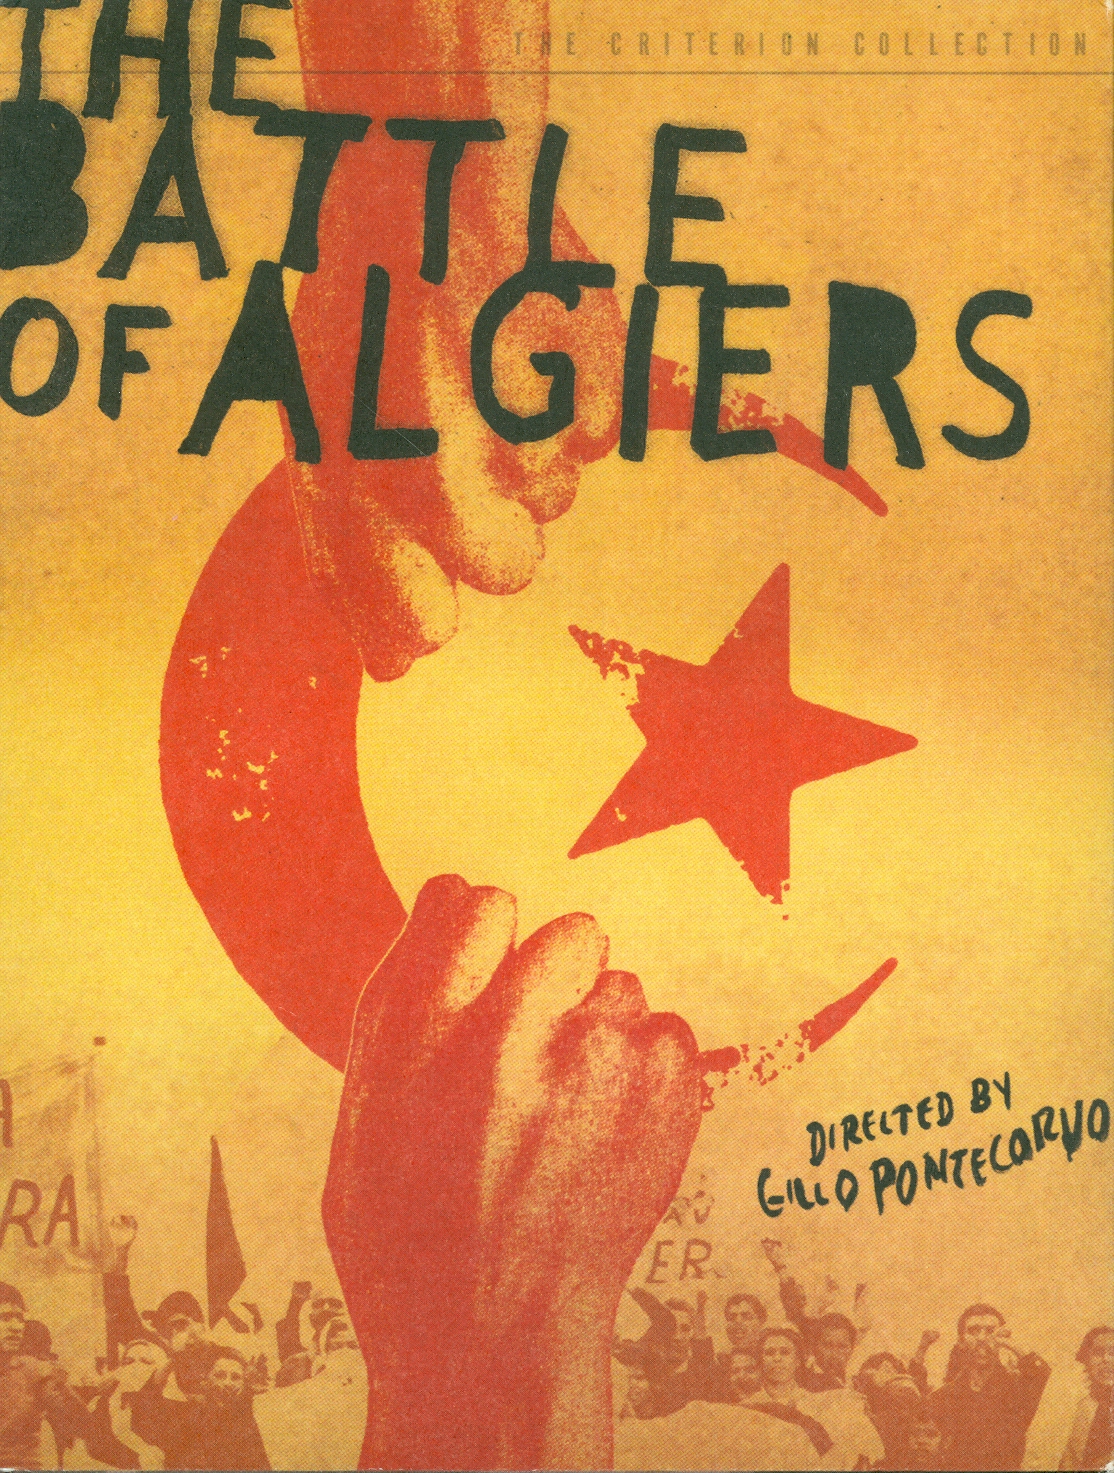  The battle of Algiers